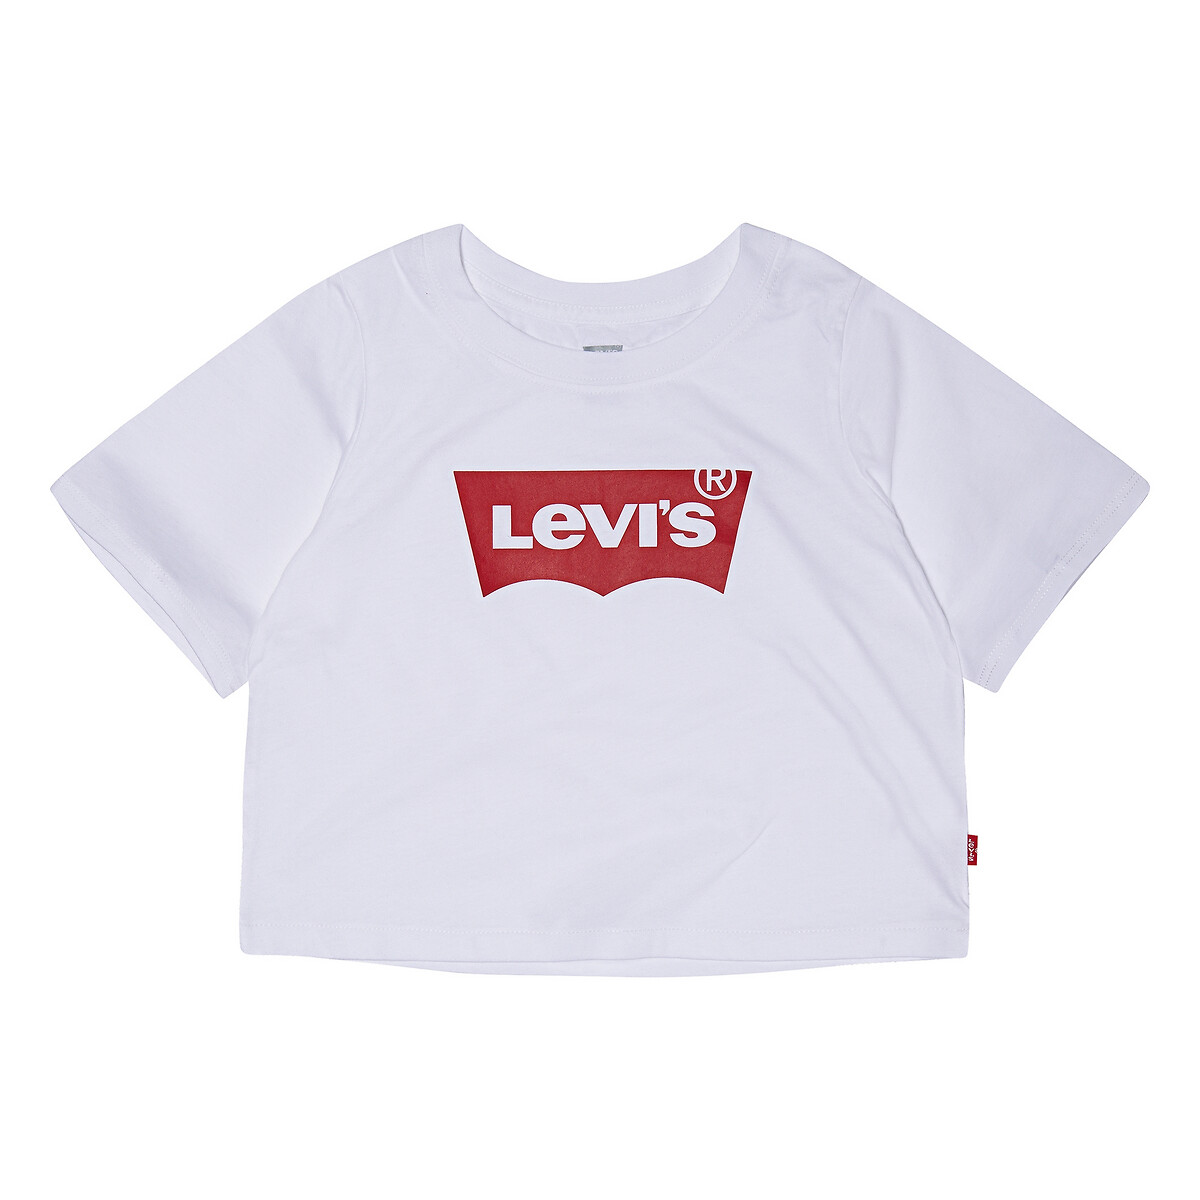 Levis Kids Crop top, 3 - 16 anos